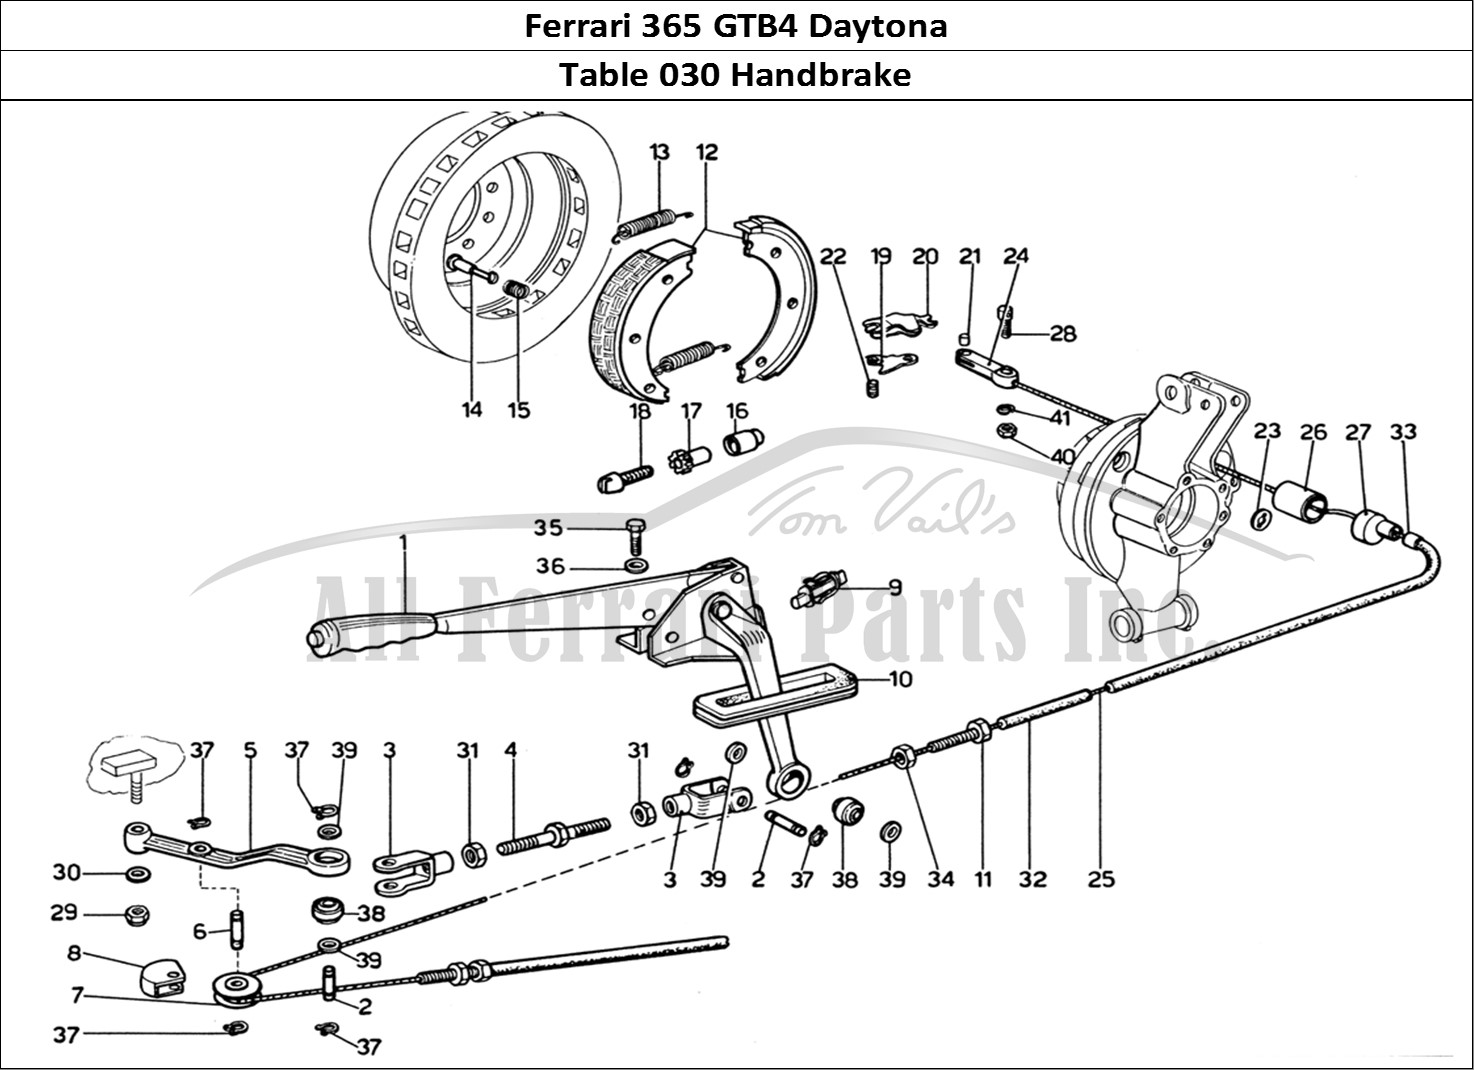 Ferrari Parts Ferrari 365 GTB4 Daytona (1969) Page 030 Hand Brake Control